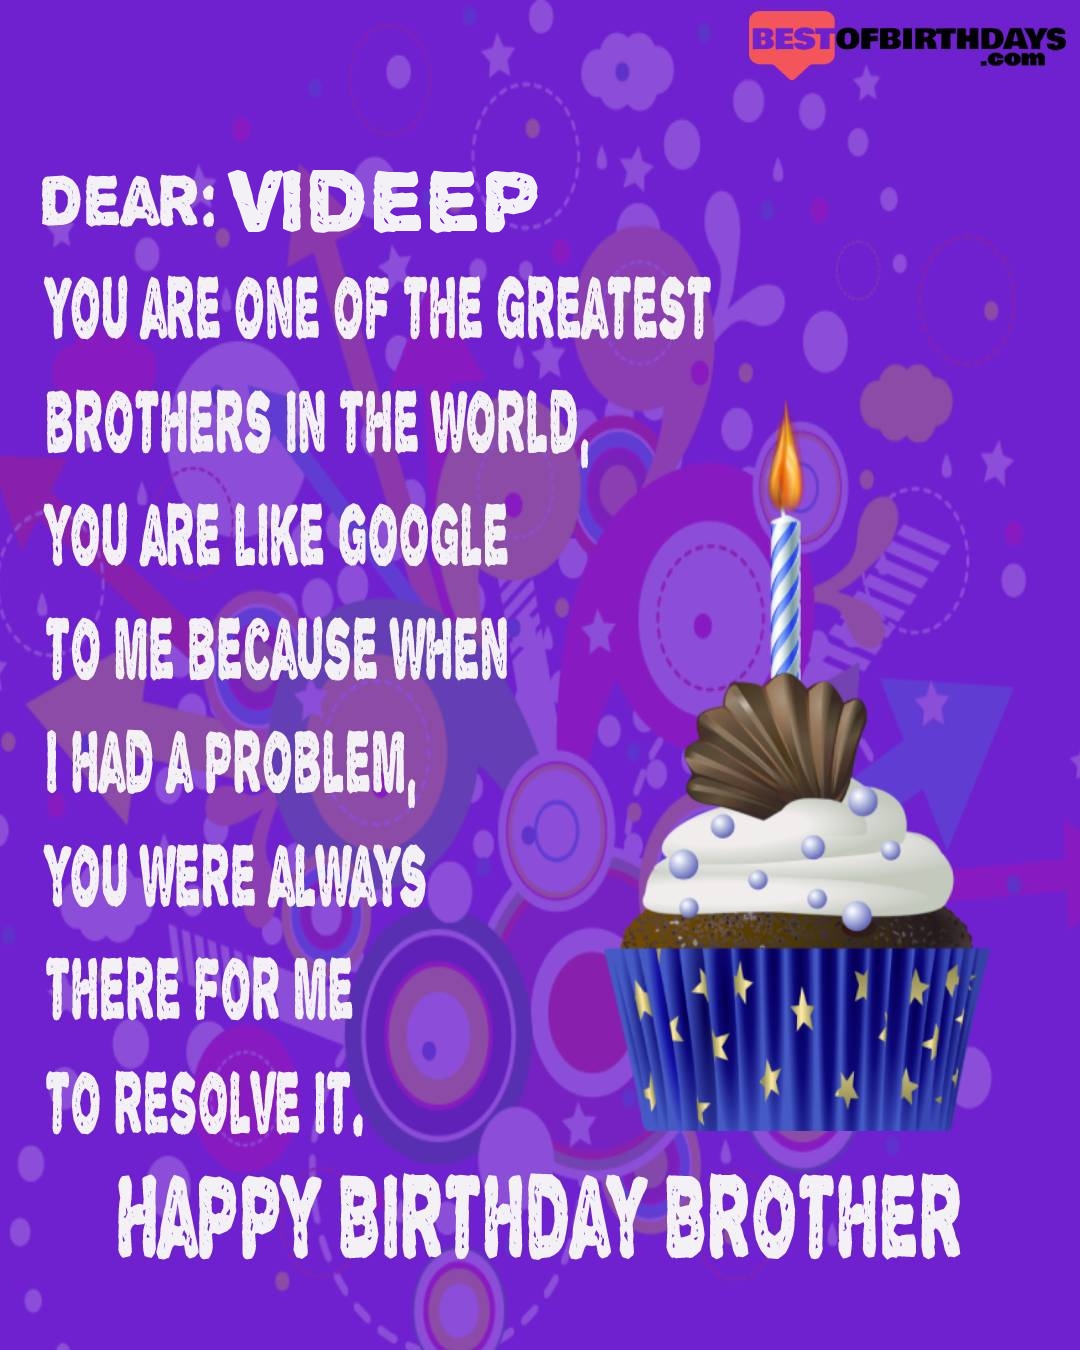 Happy birthday videep bhai brother bro